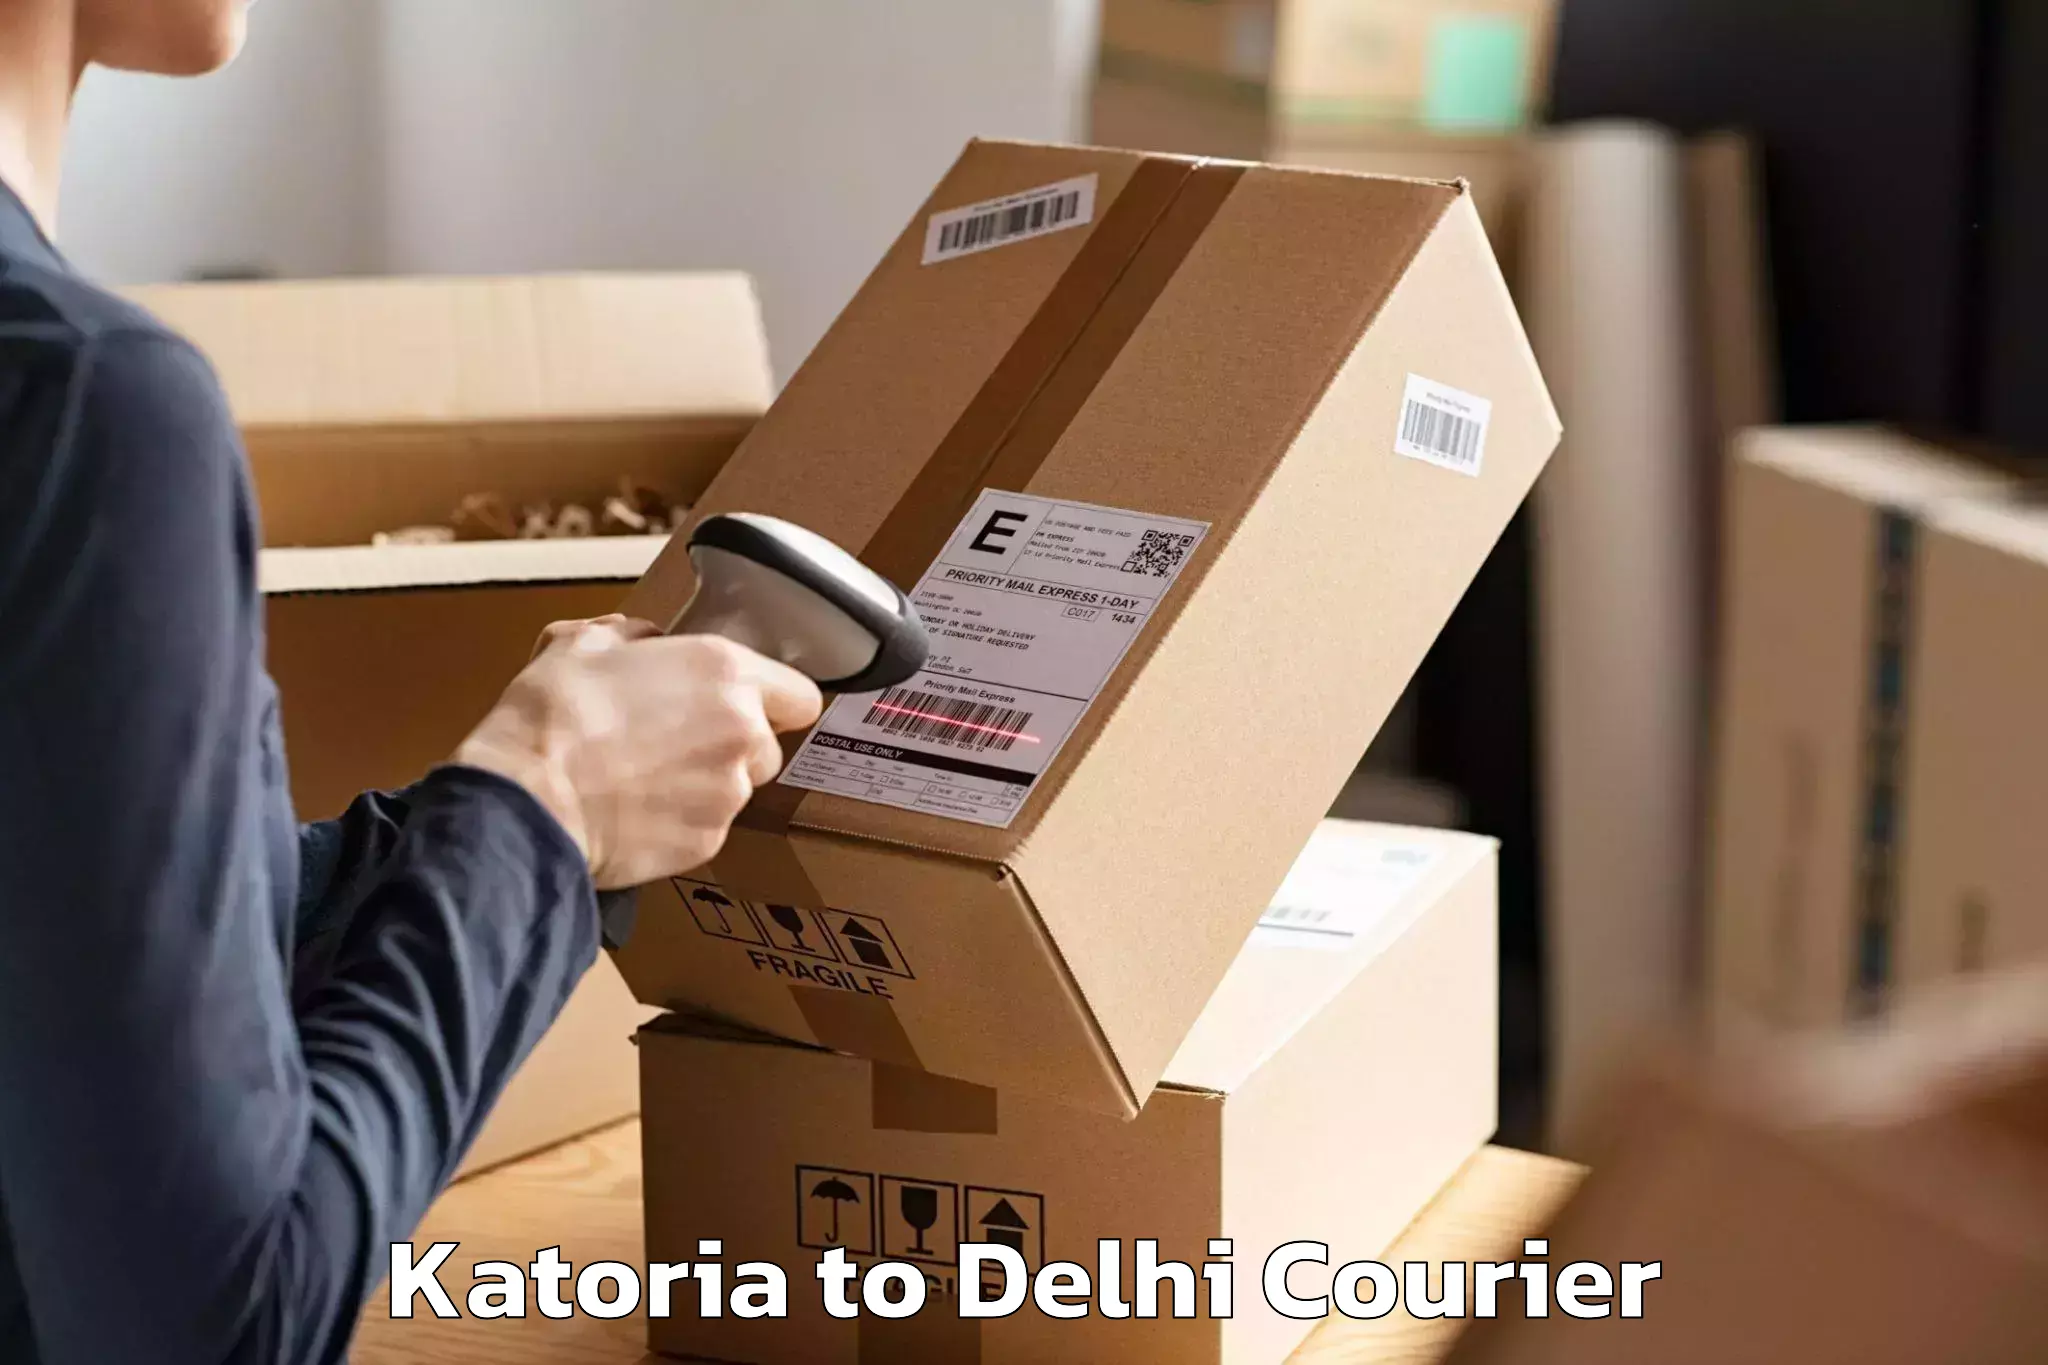 Professional moving company in Katoria to University of Delhi